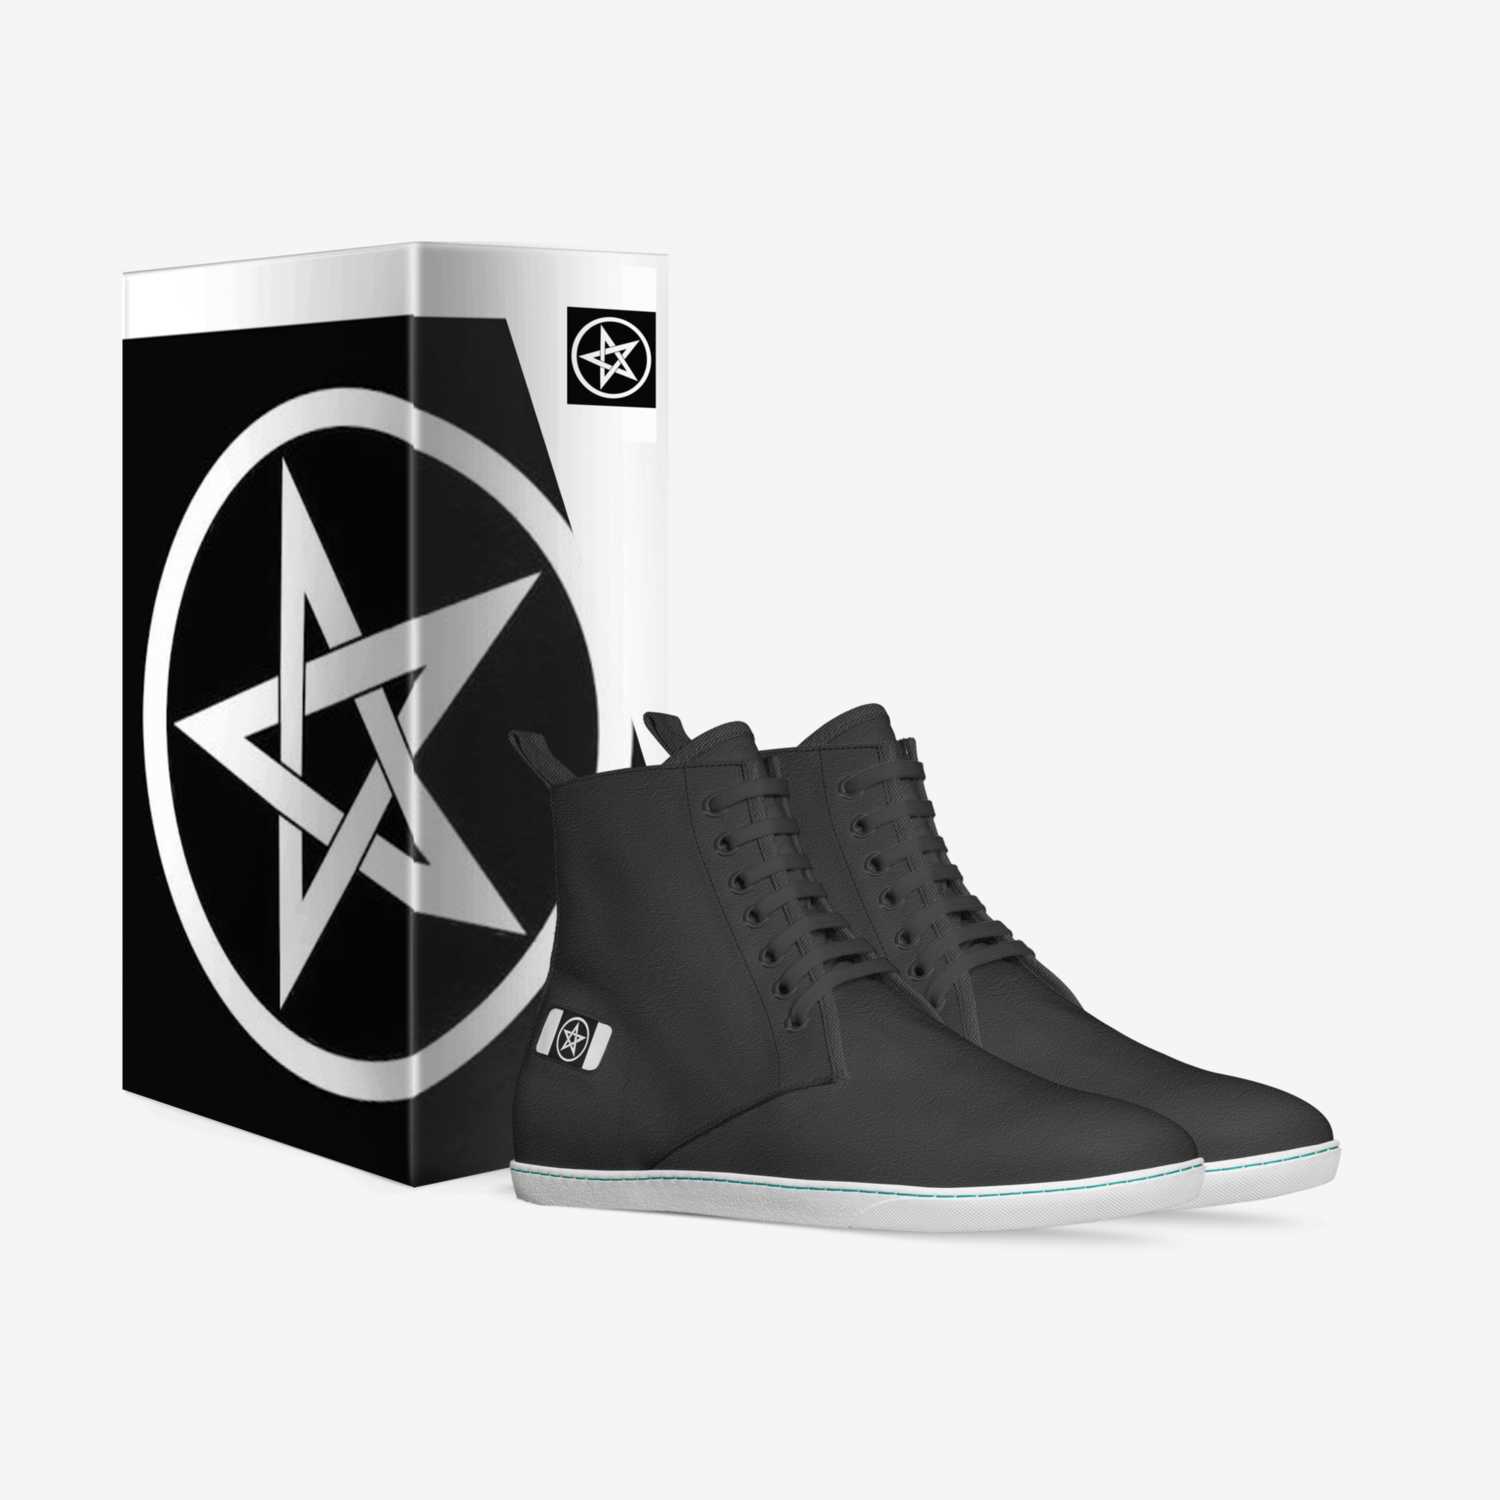 Pentagram  custom made in Italy shoes by Harrison Gallard | Box view